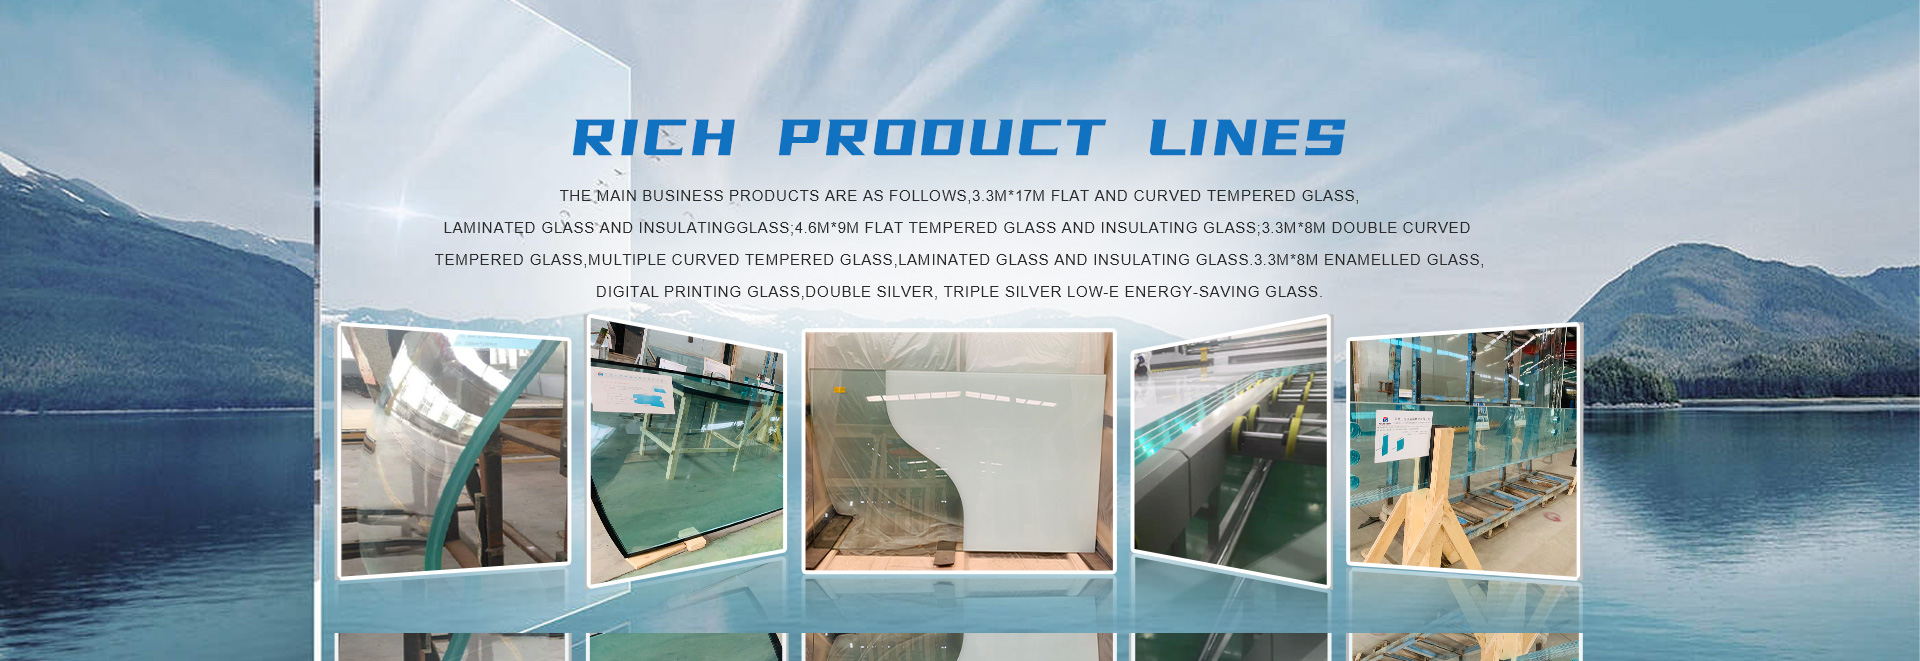 Pingdingshan Youbo Glass Technology Co., Ltd